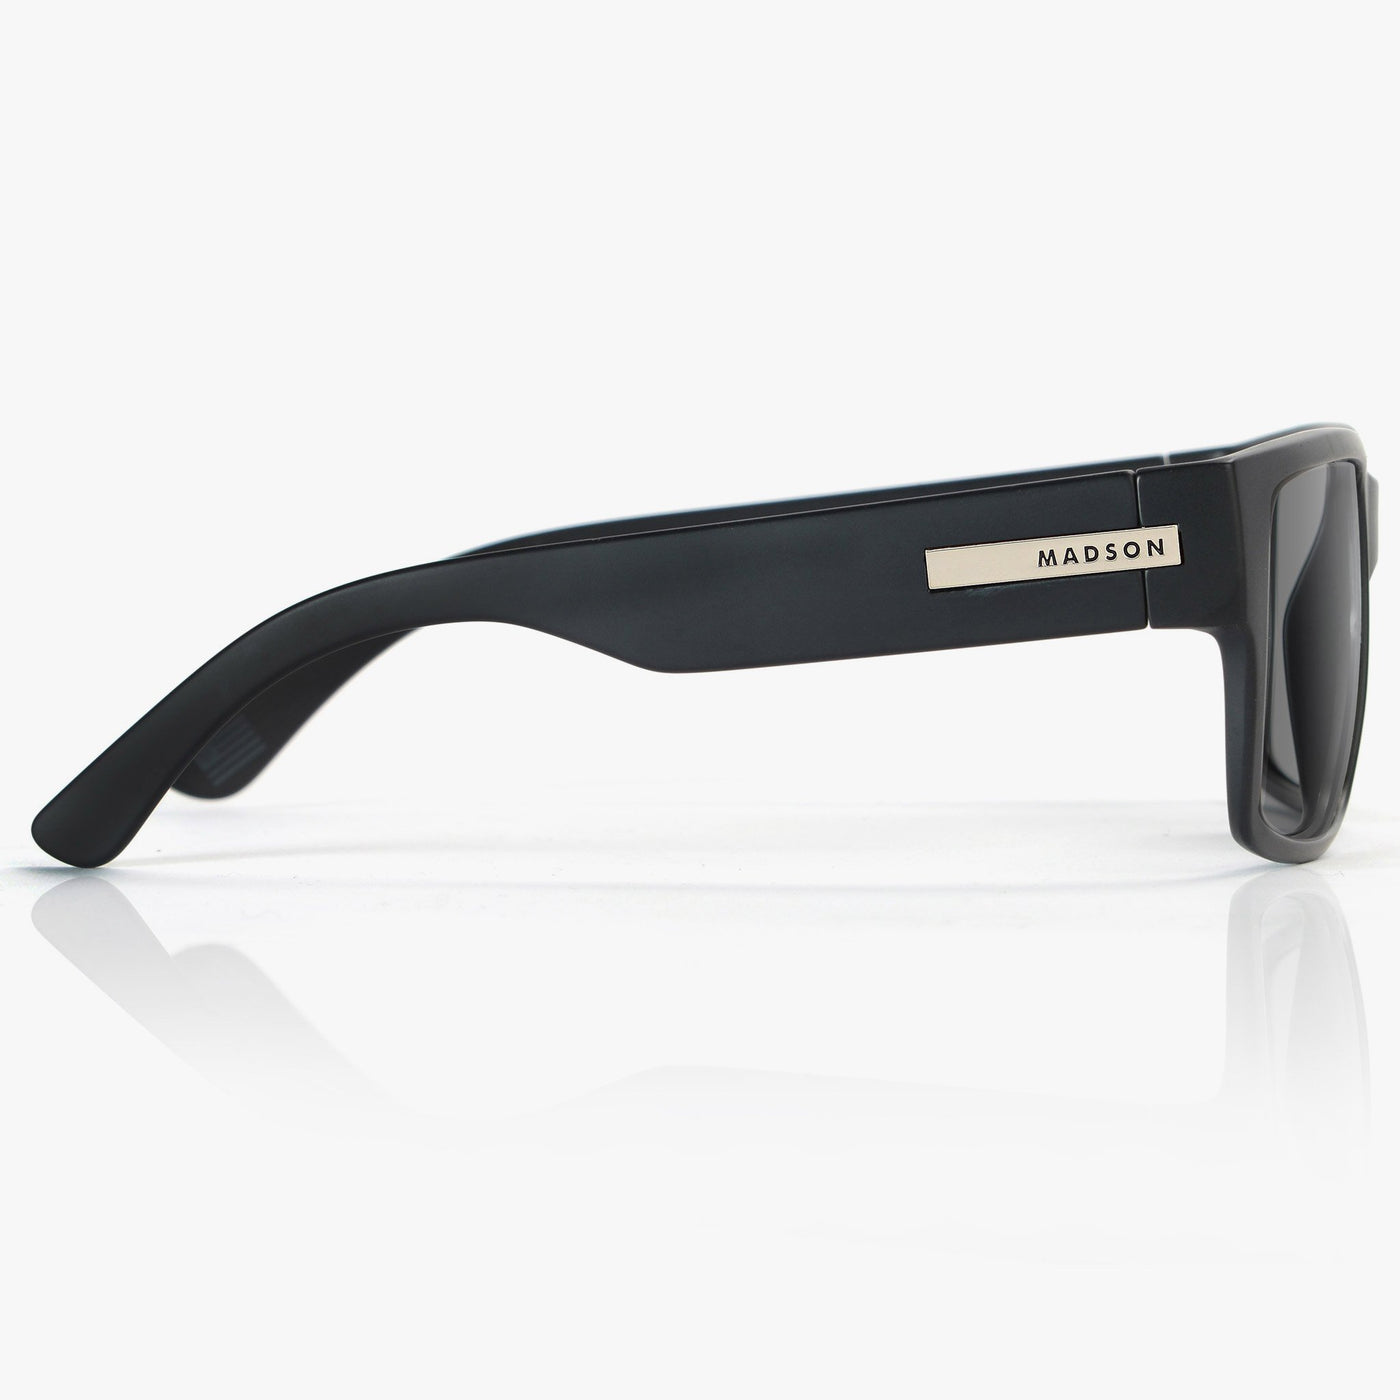 MADSON oversized sunglasses